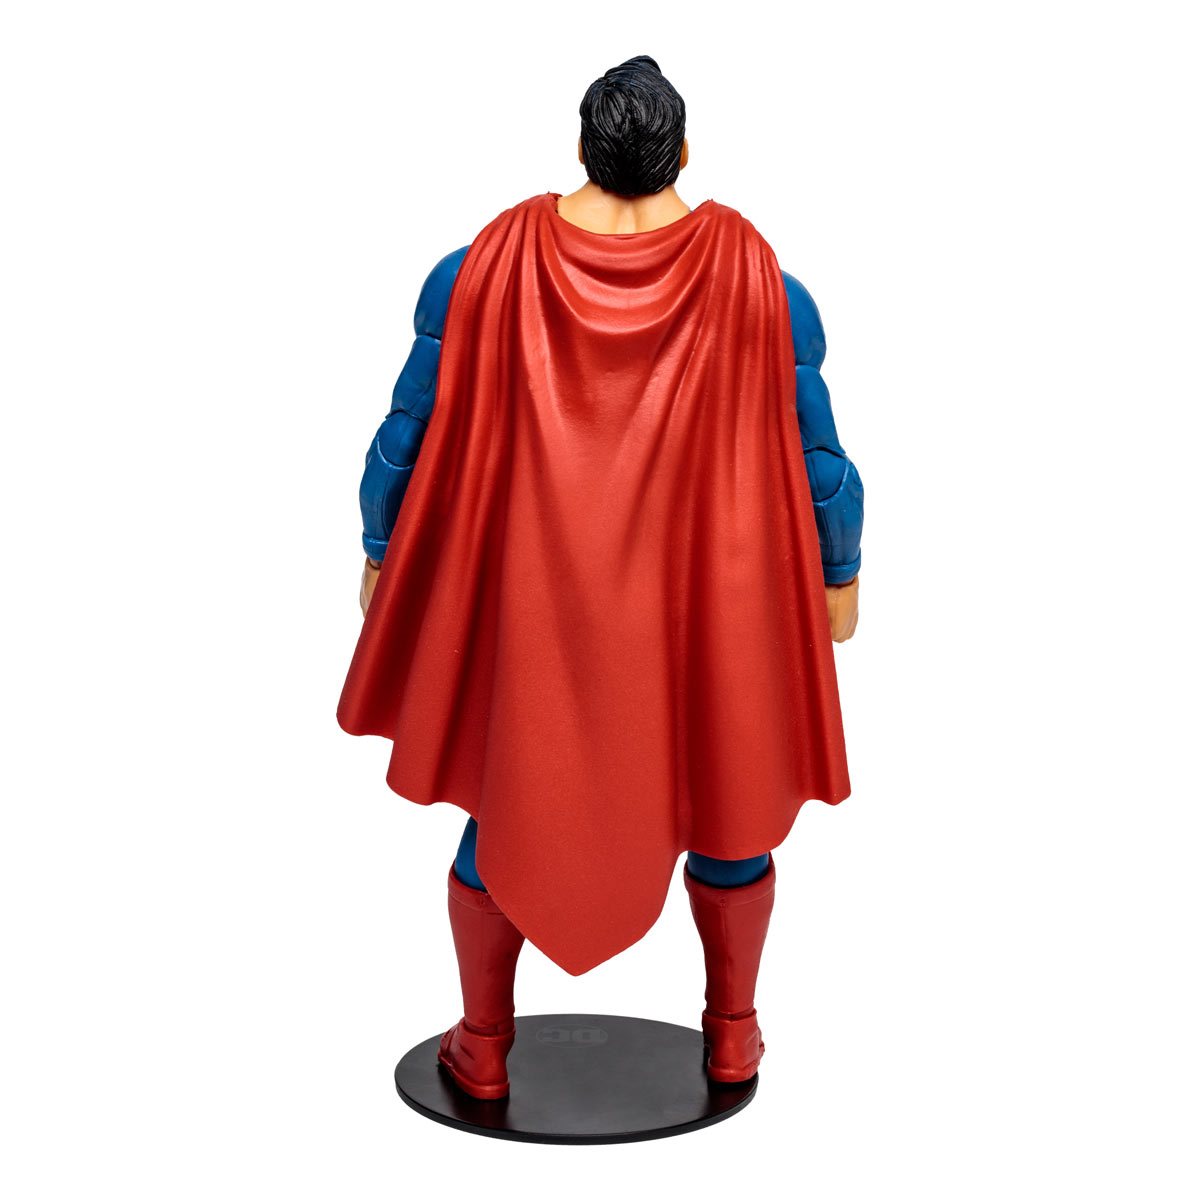 DC Superman action figure back view - heretoserveyou